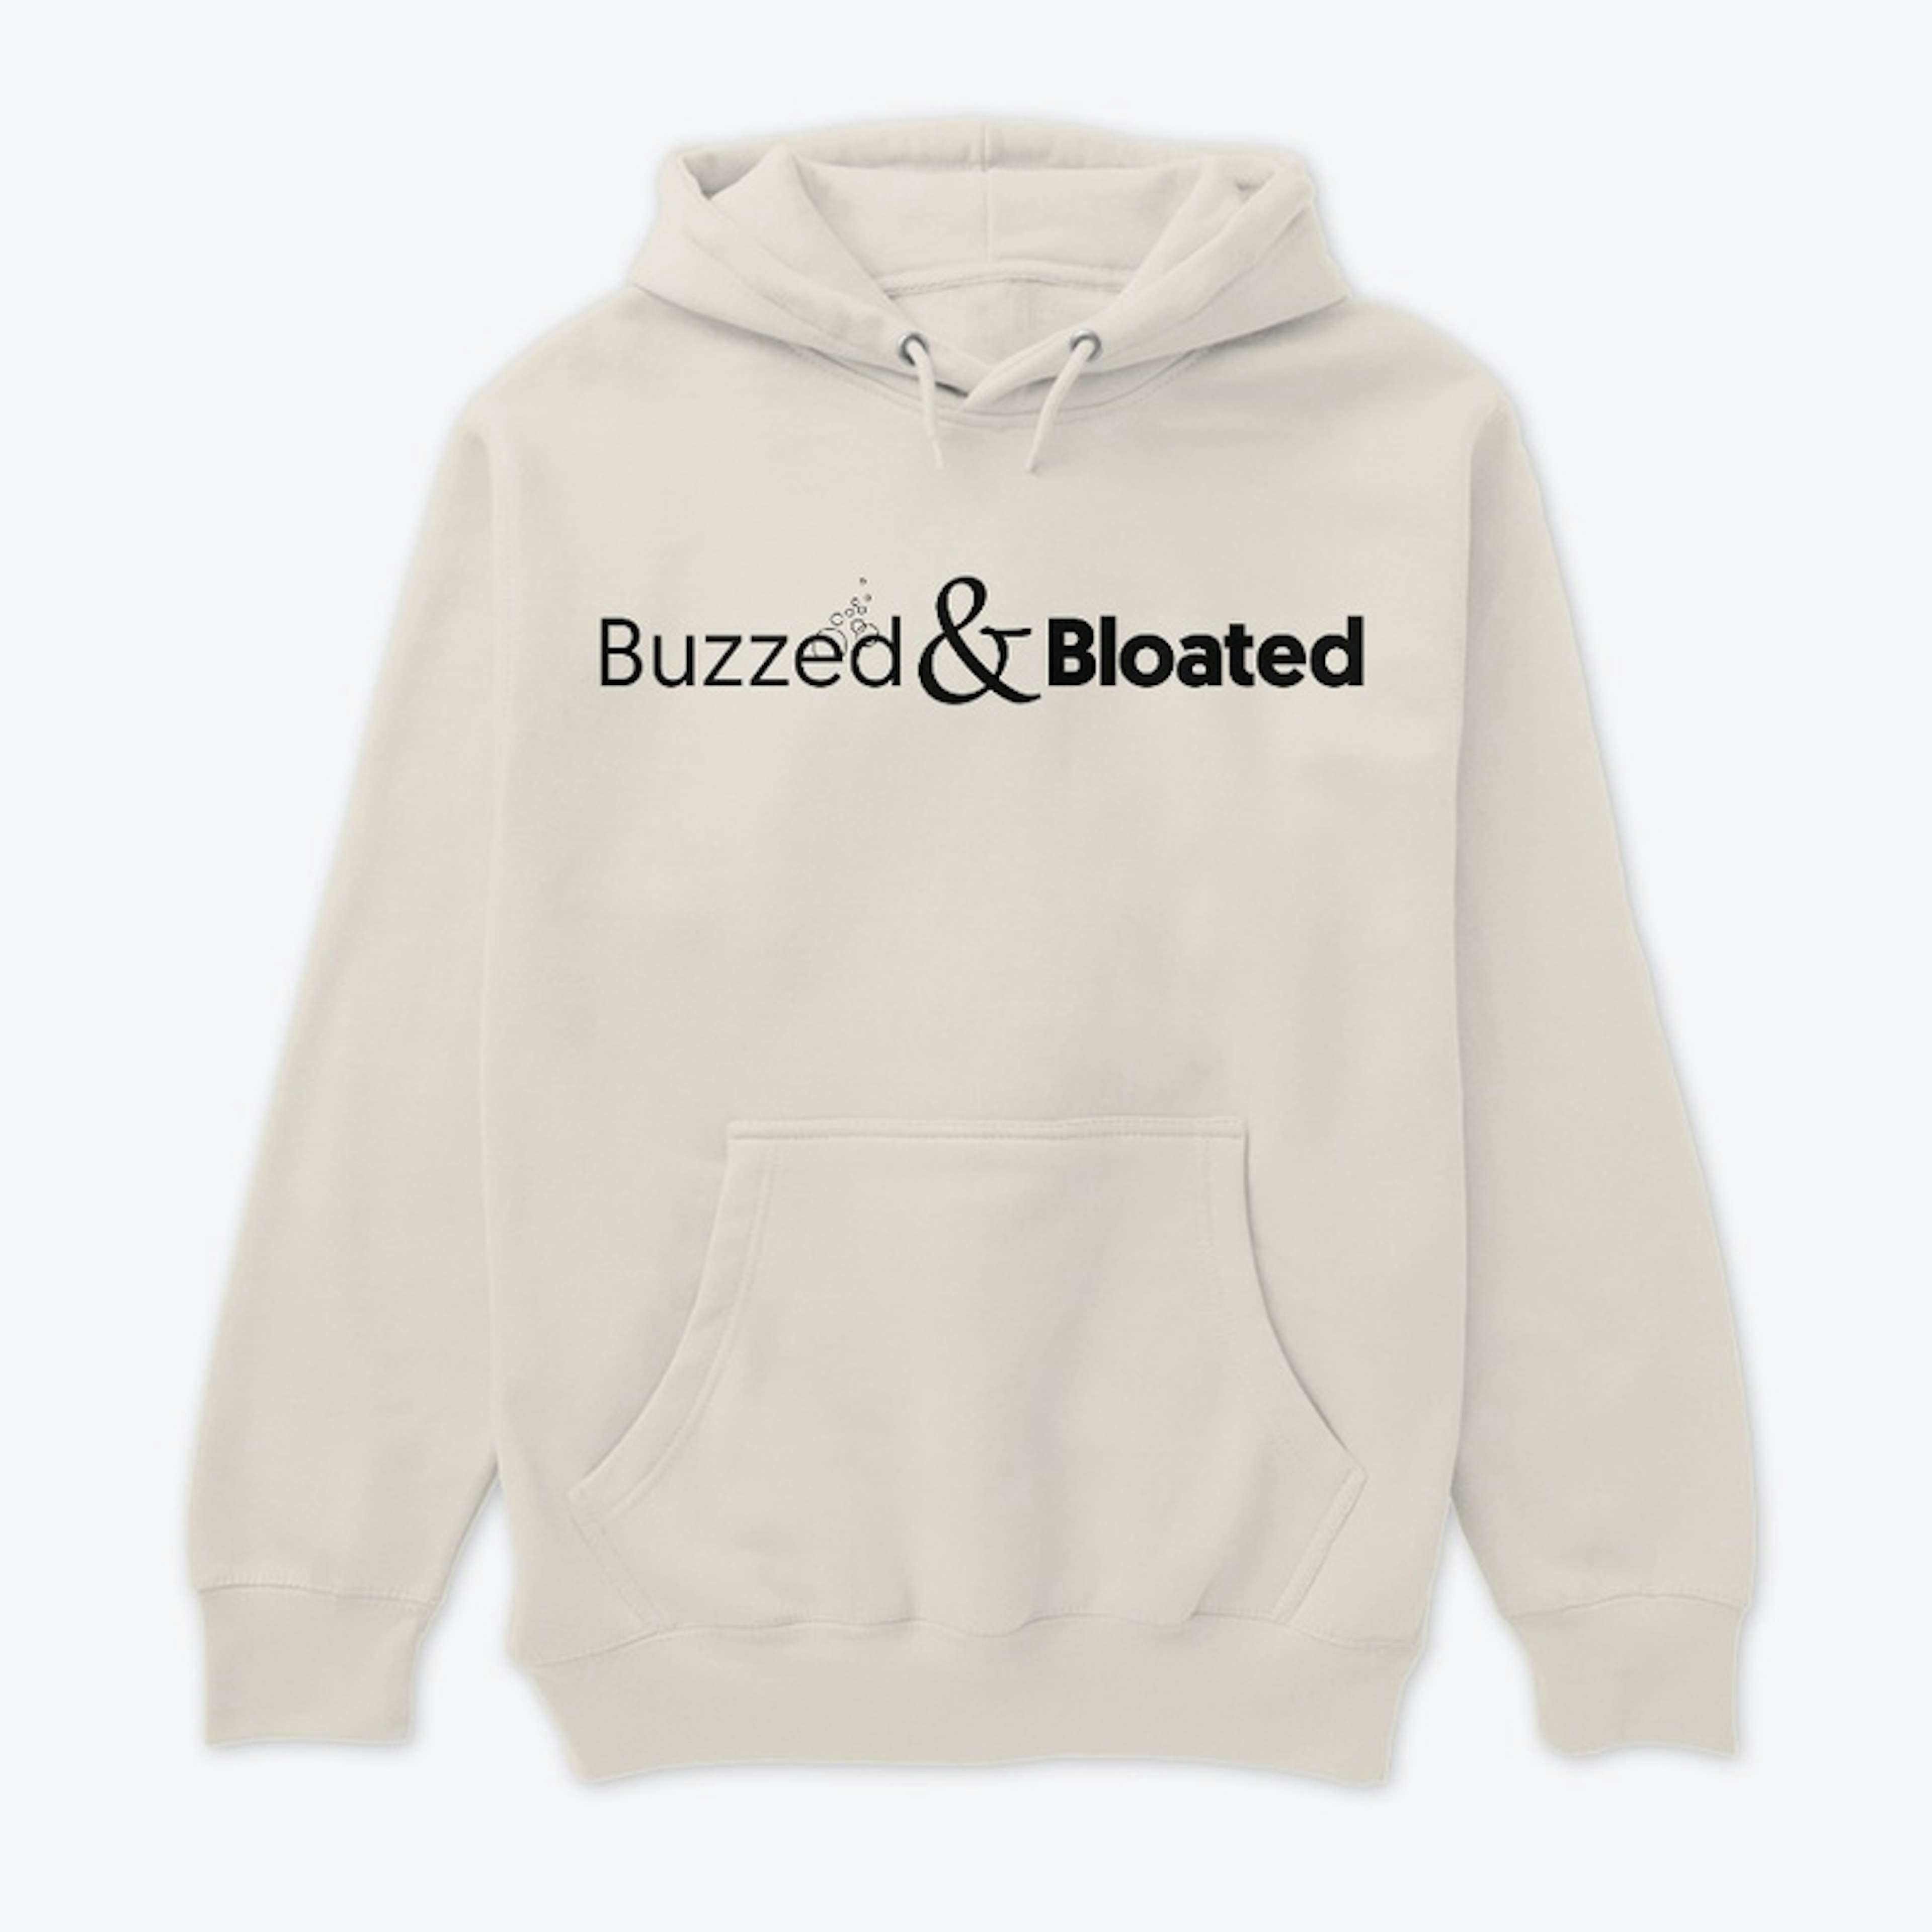 Buzzed & Bloated